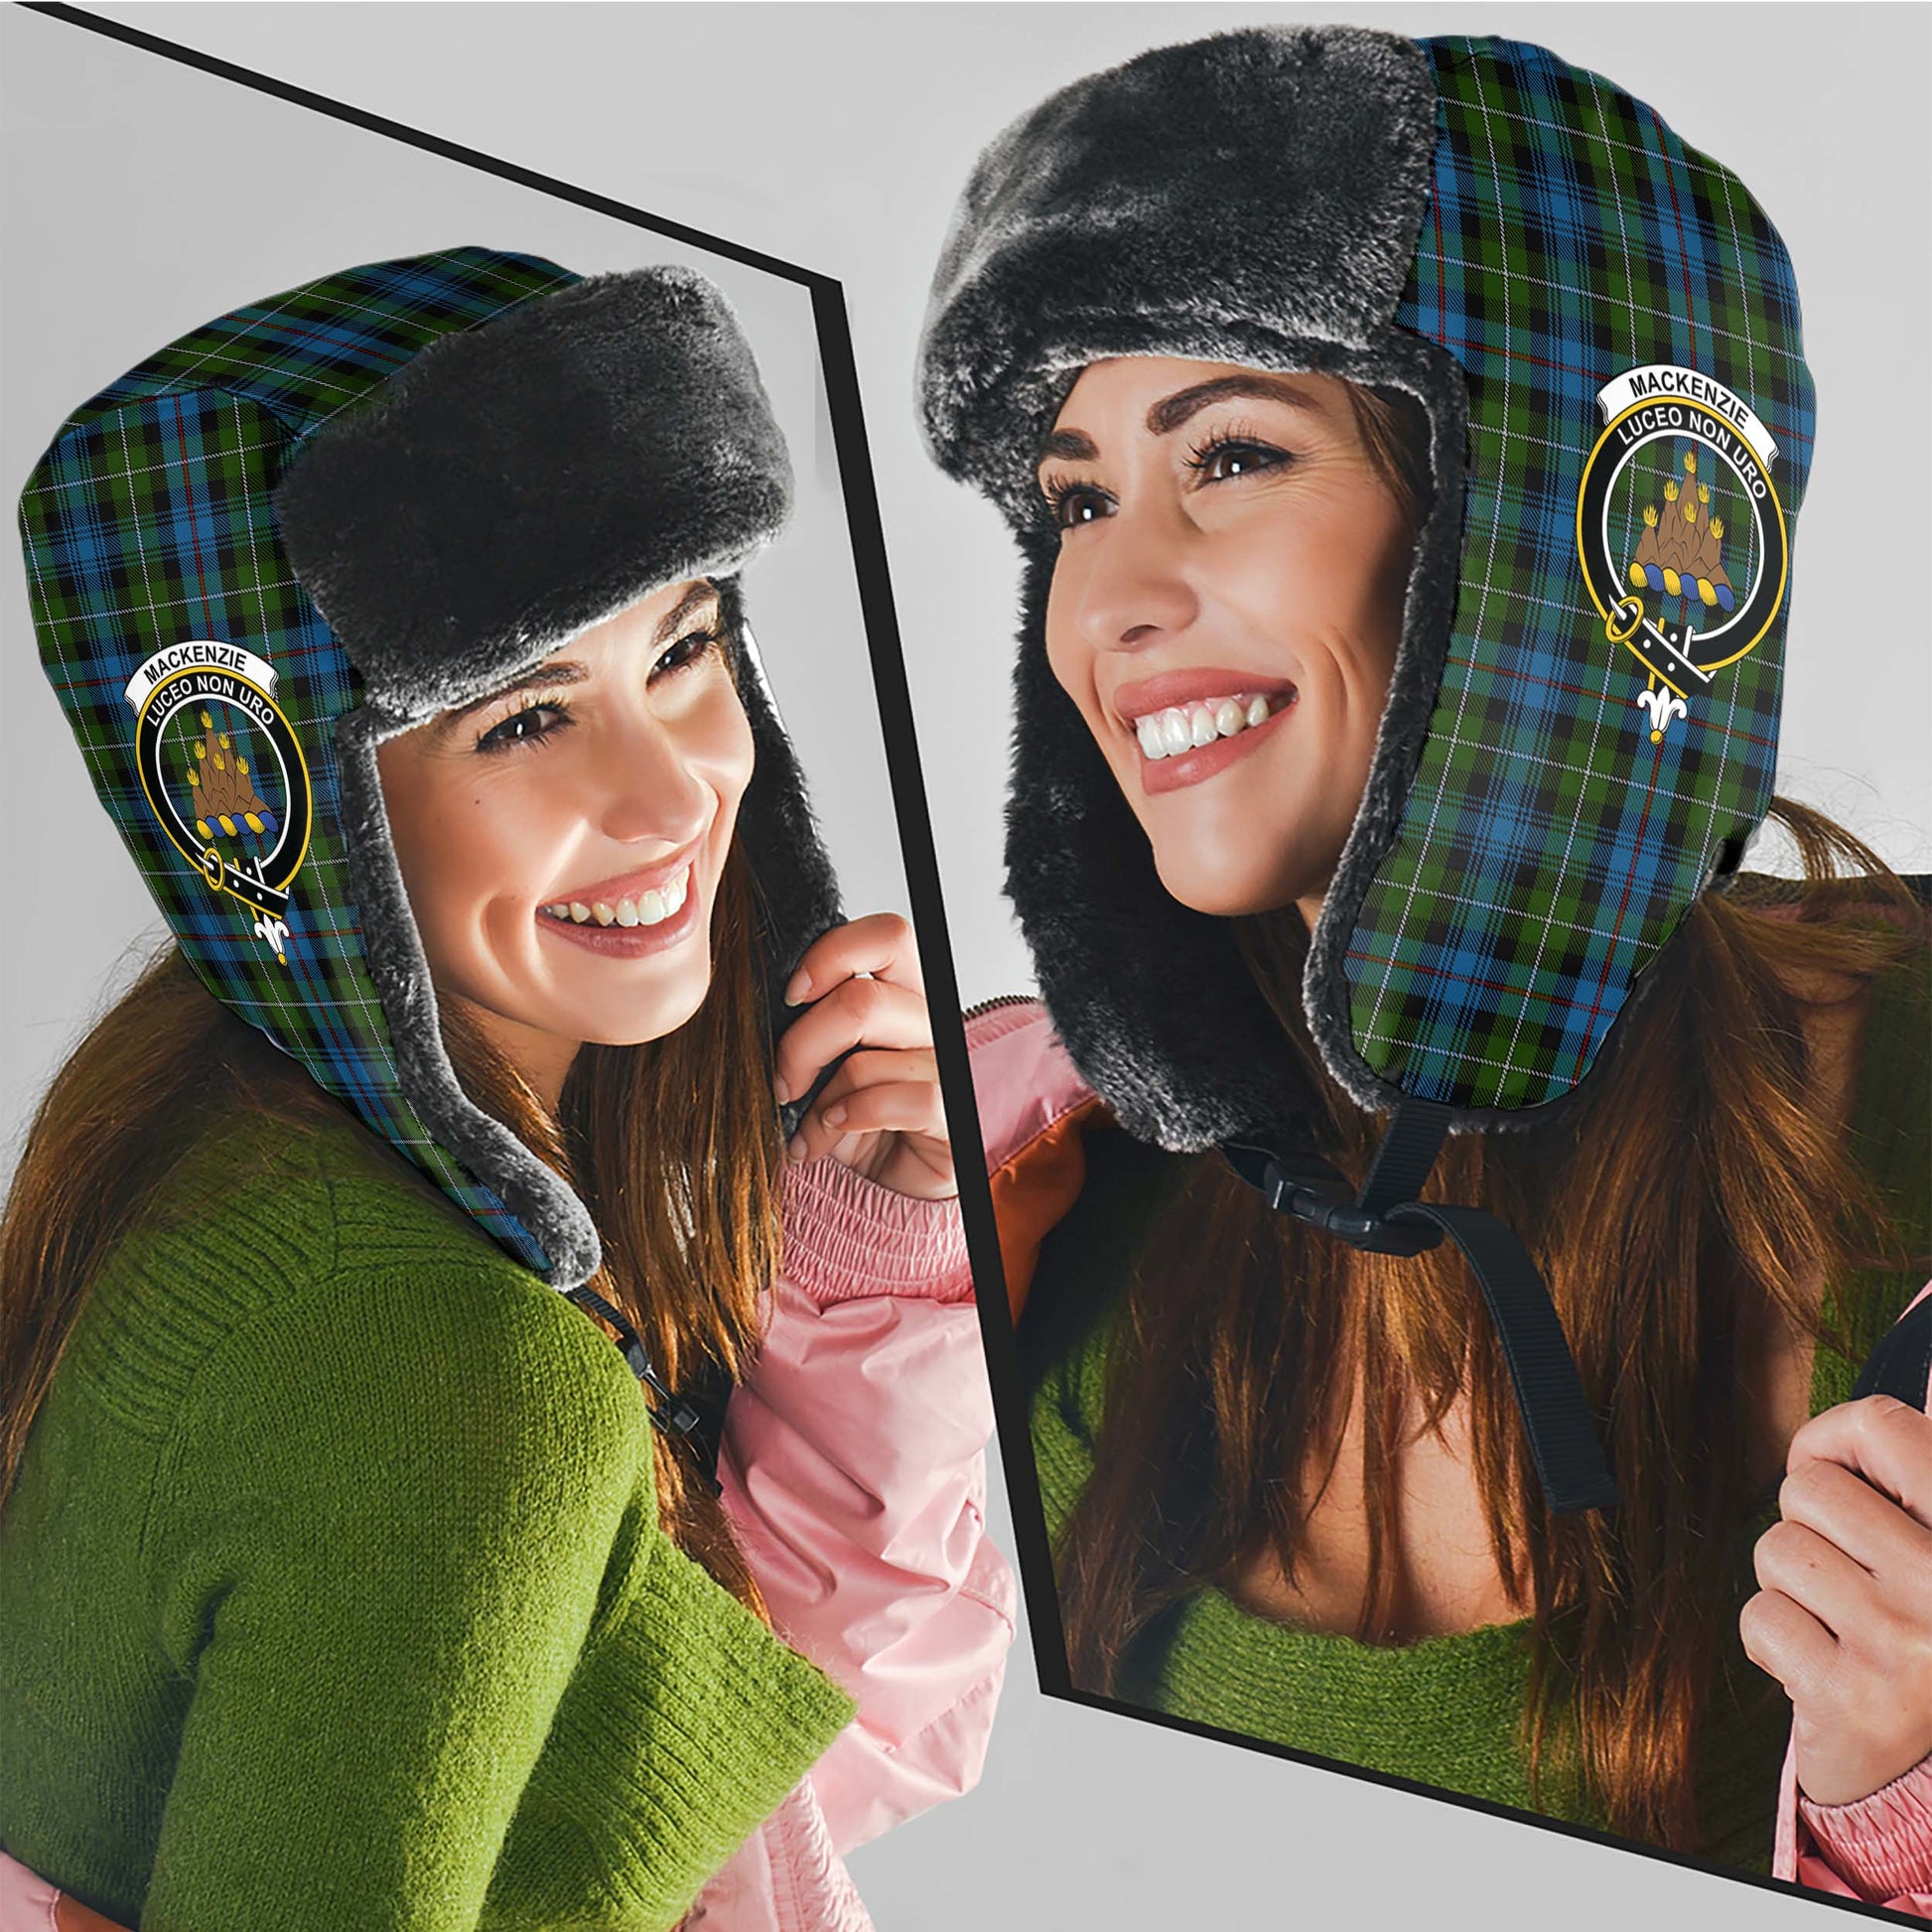 MacKenzie Tartan Winter Trapper Hat with Family Crest - Tartanvibesclothing